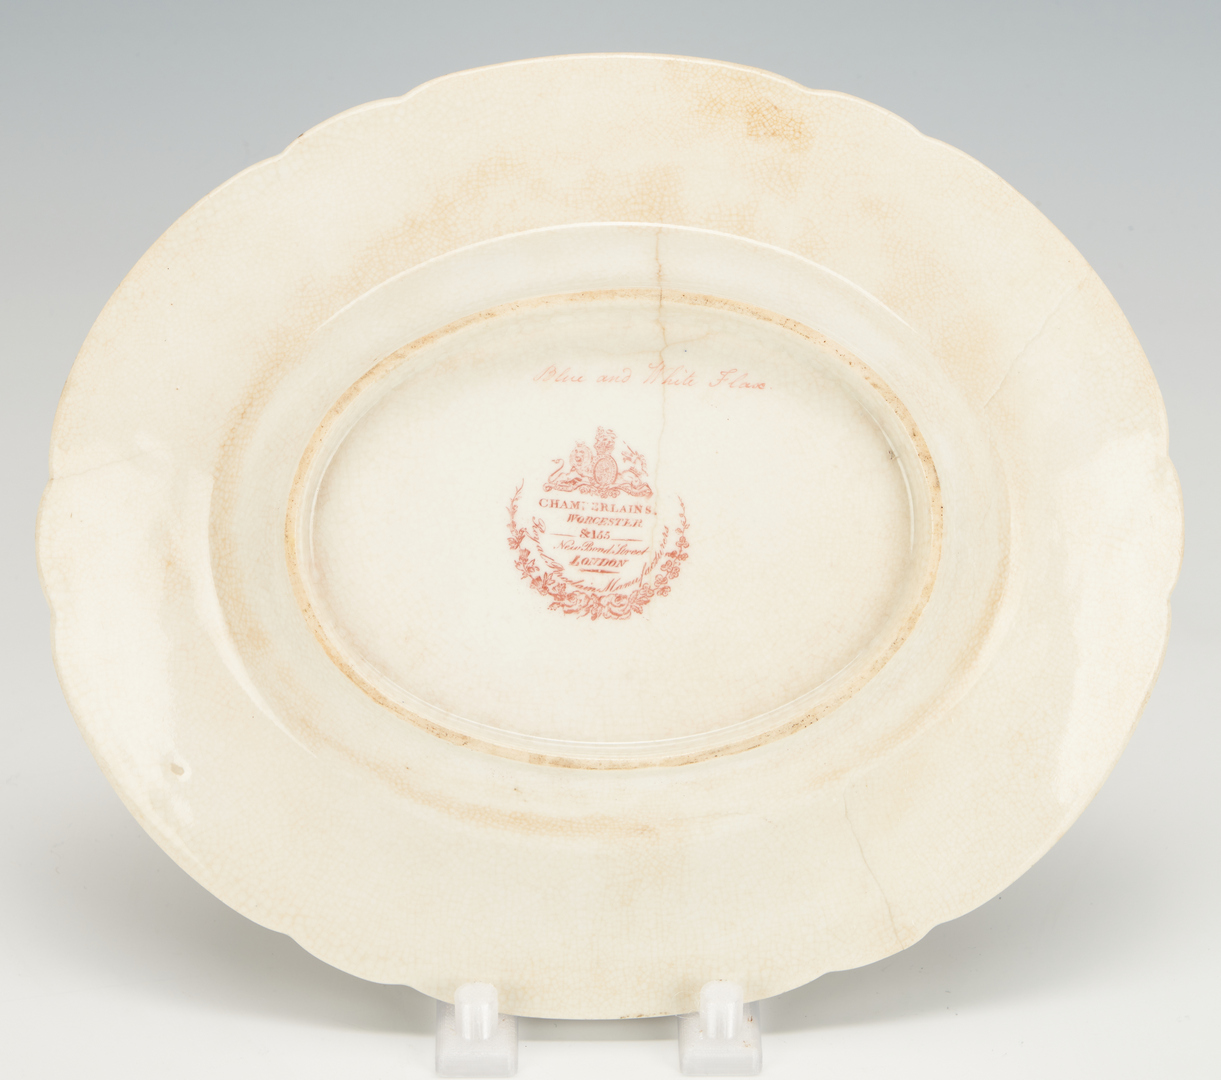 Lot 347: Three (3) European Export Ceramic Plates for Arab or Islamic Market